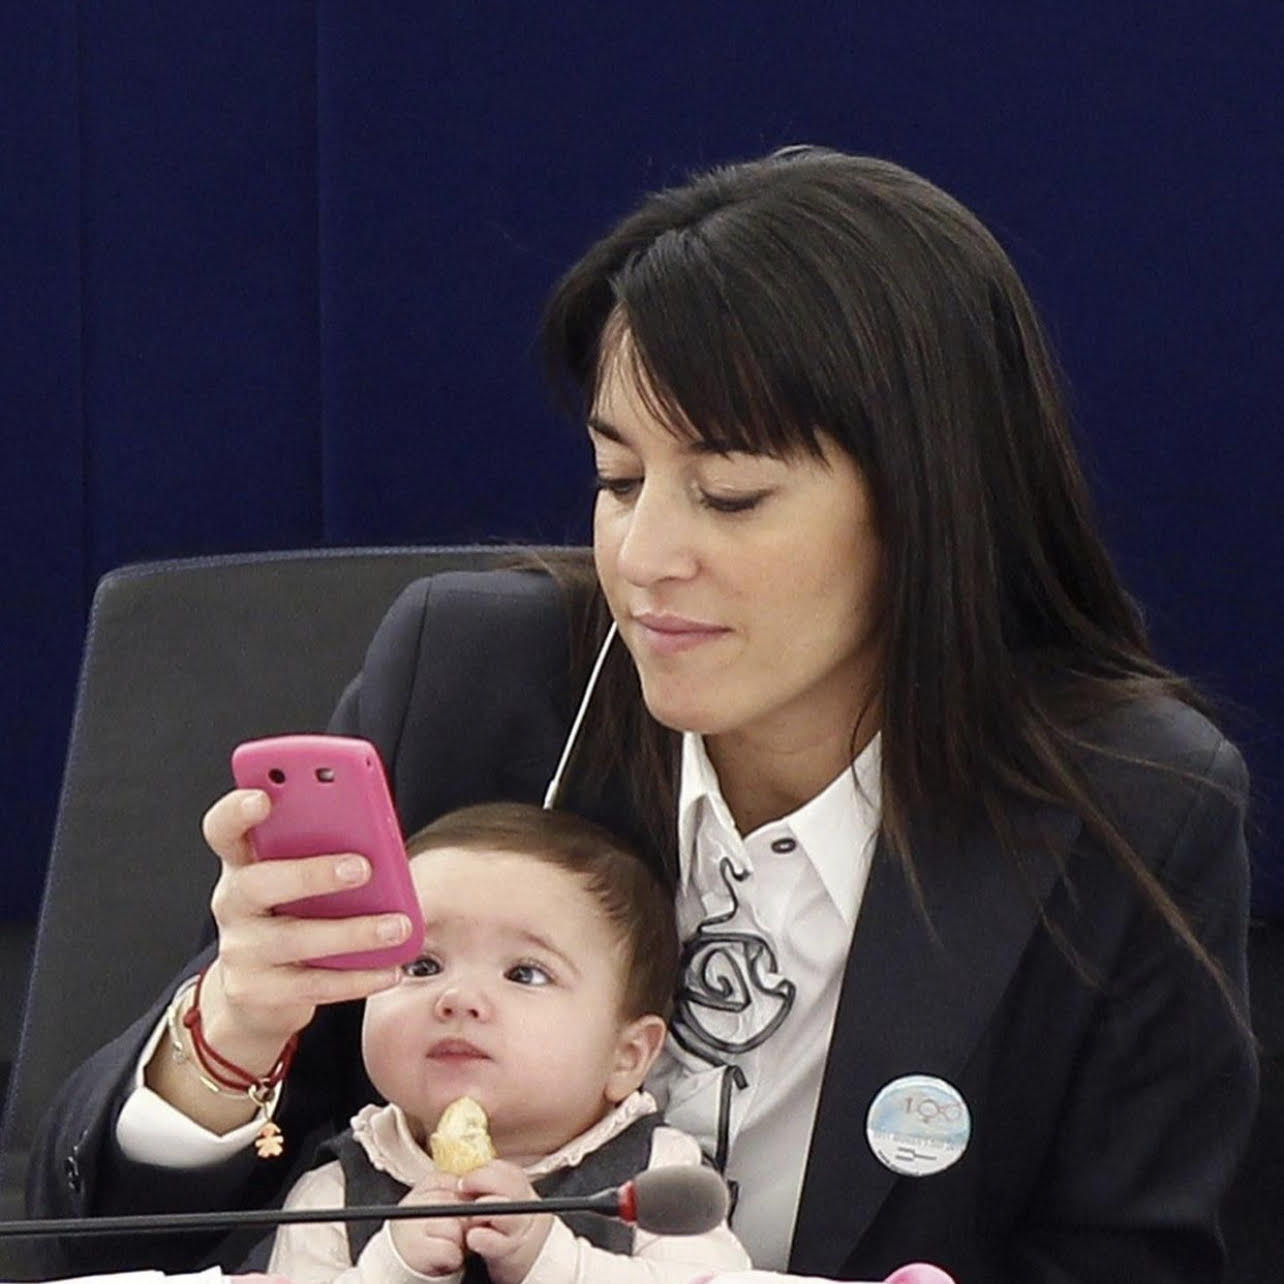 Licia Ronzulli: Η Ιταλίδα Ευρωβουλευτής που έπαιρνε το μωρό της στο «γραφείο» ξαναέγινε viral